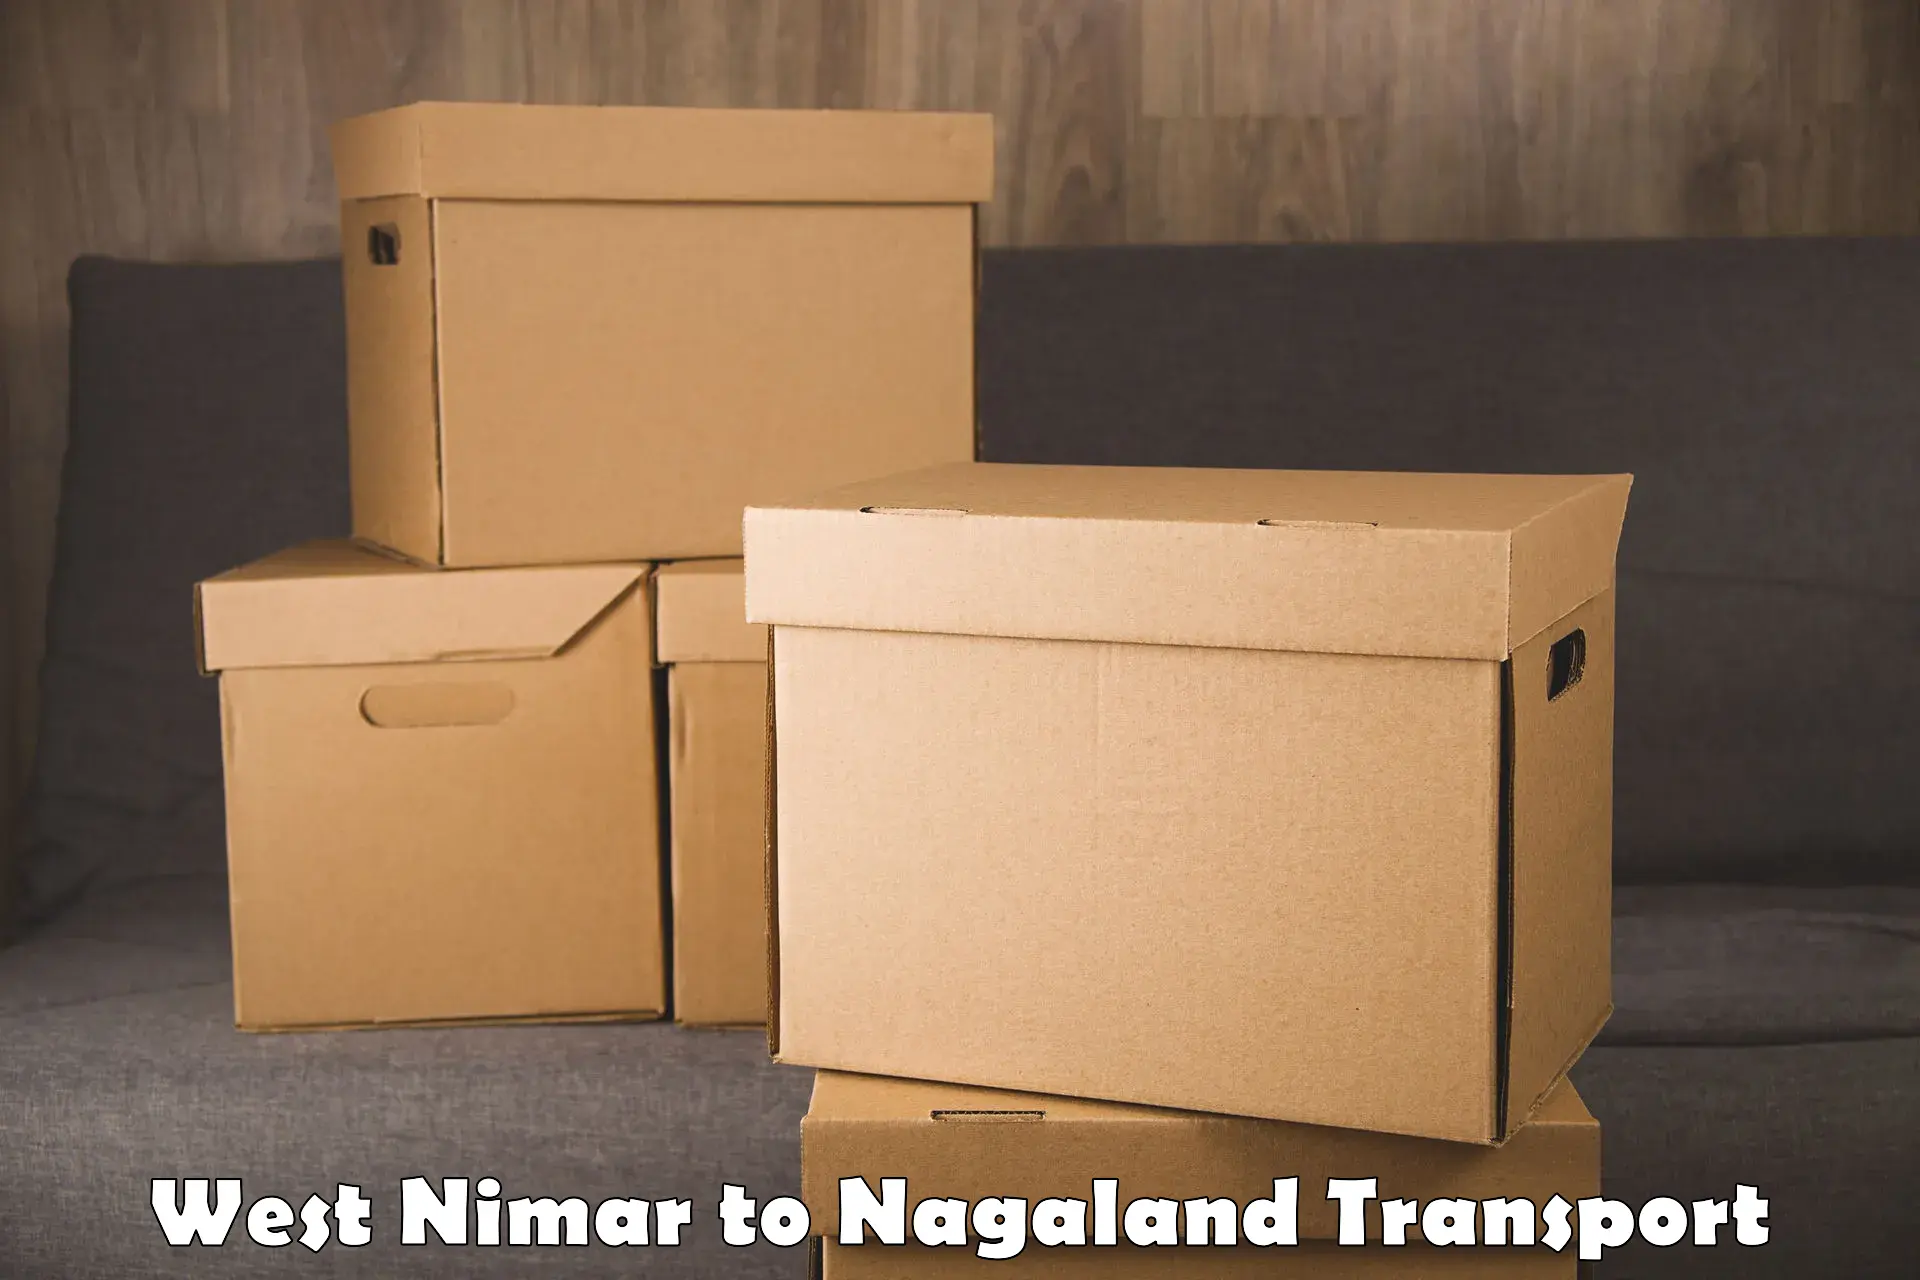 Transport in sharing West Nimar to Dimapur